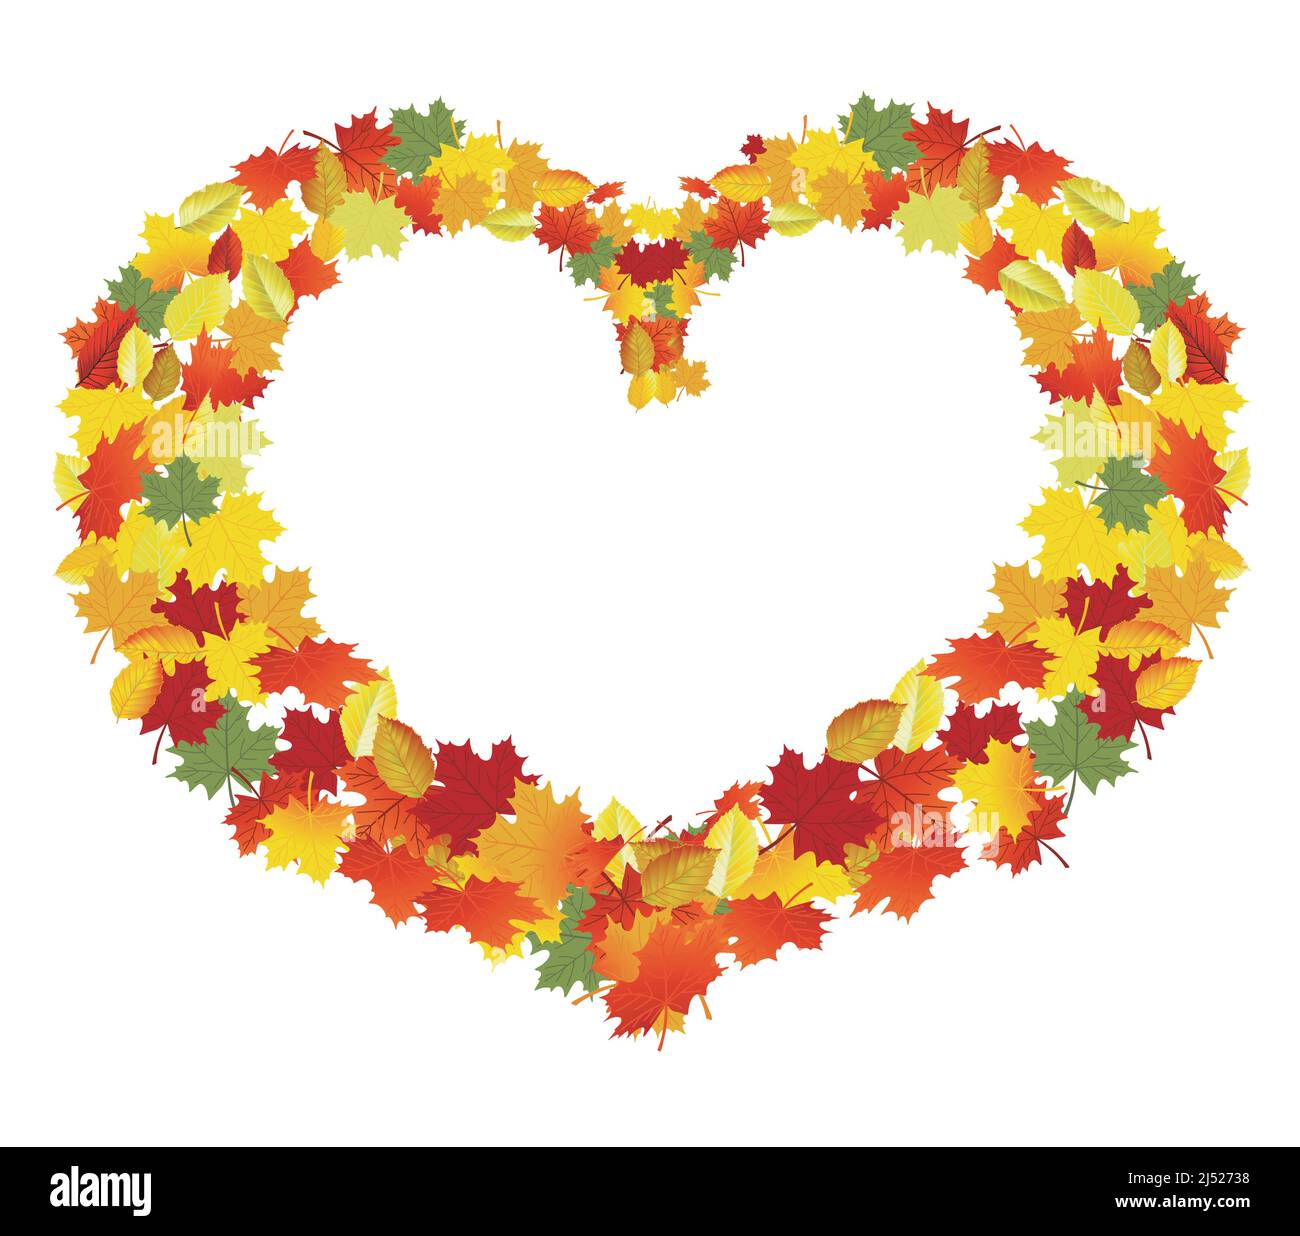 Autumn leaves in heart shape,  illustration on white background. Stock Vector